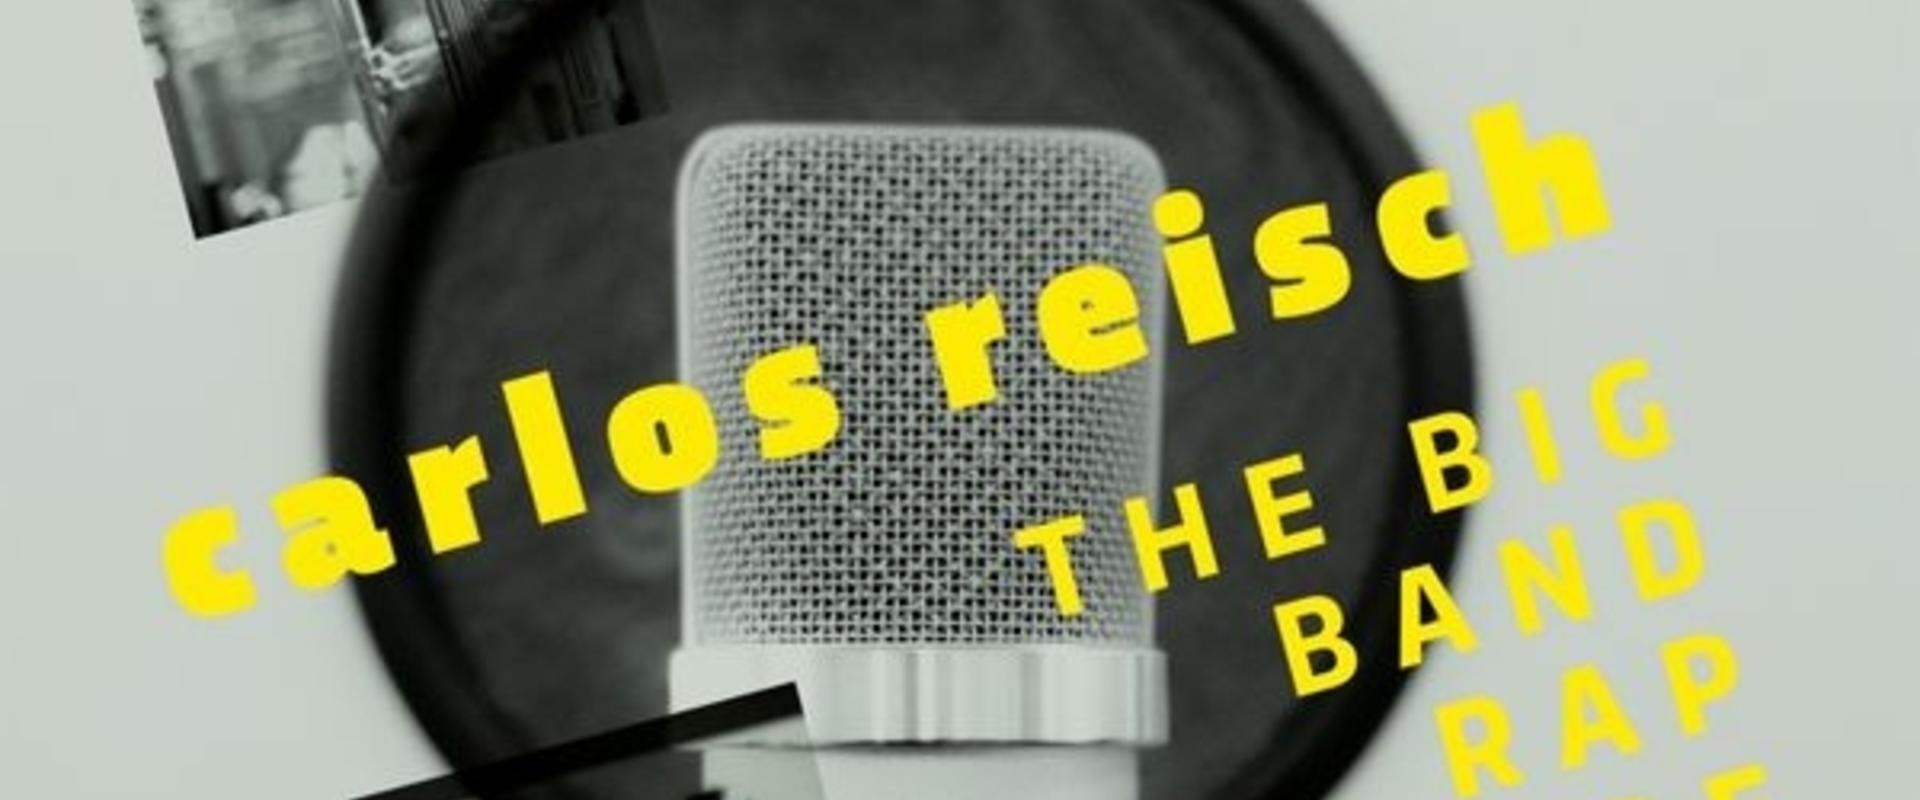 Carlos Reisch - The Big Band RAPertoire